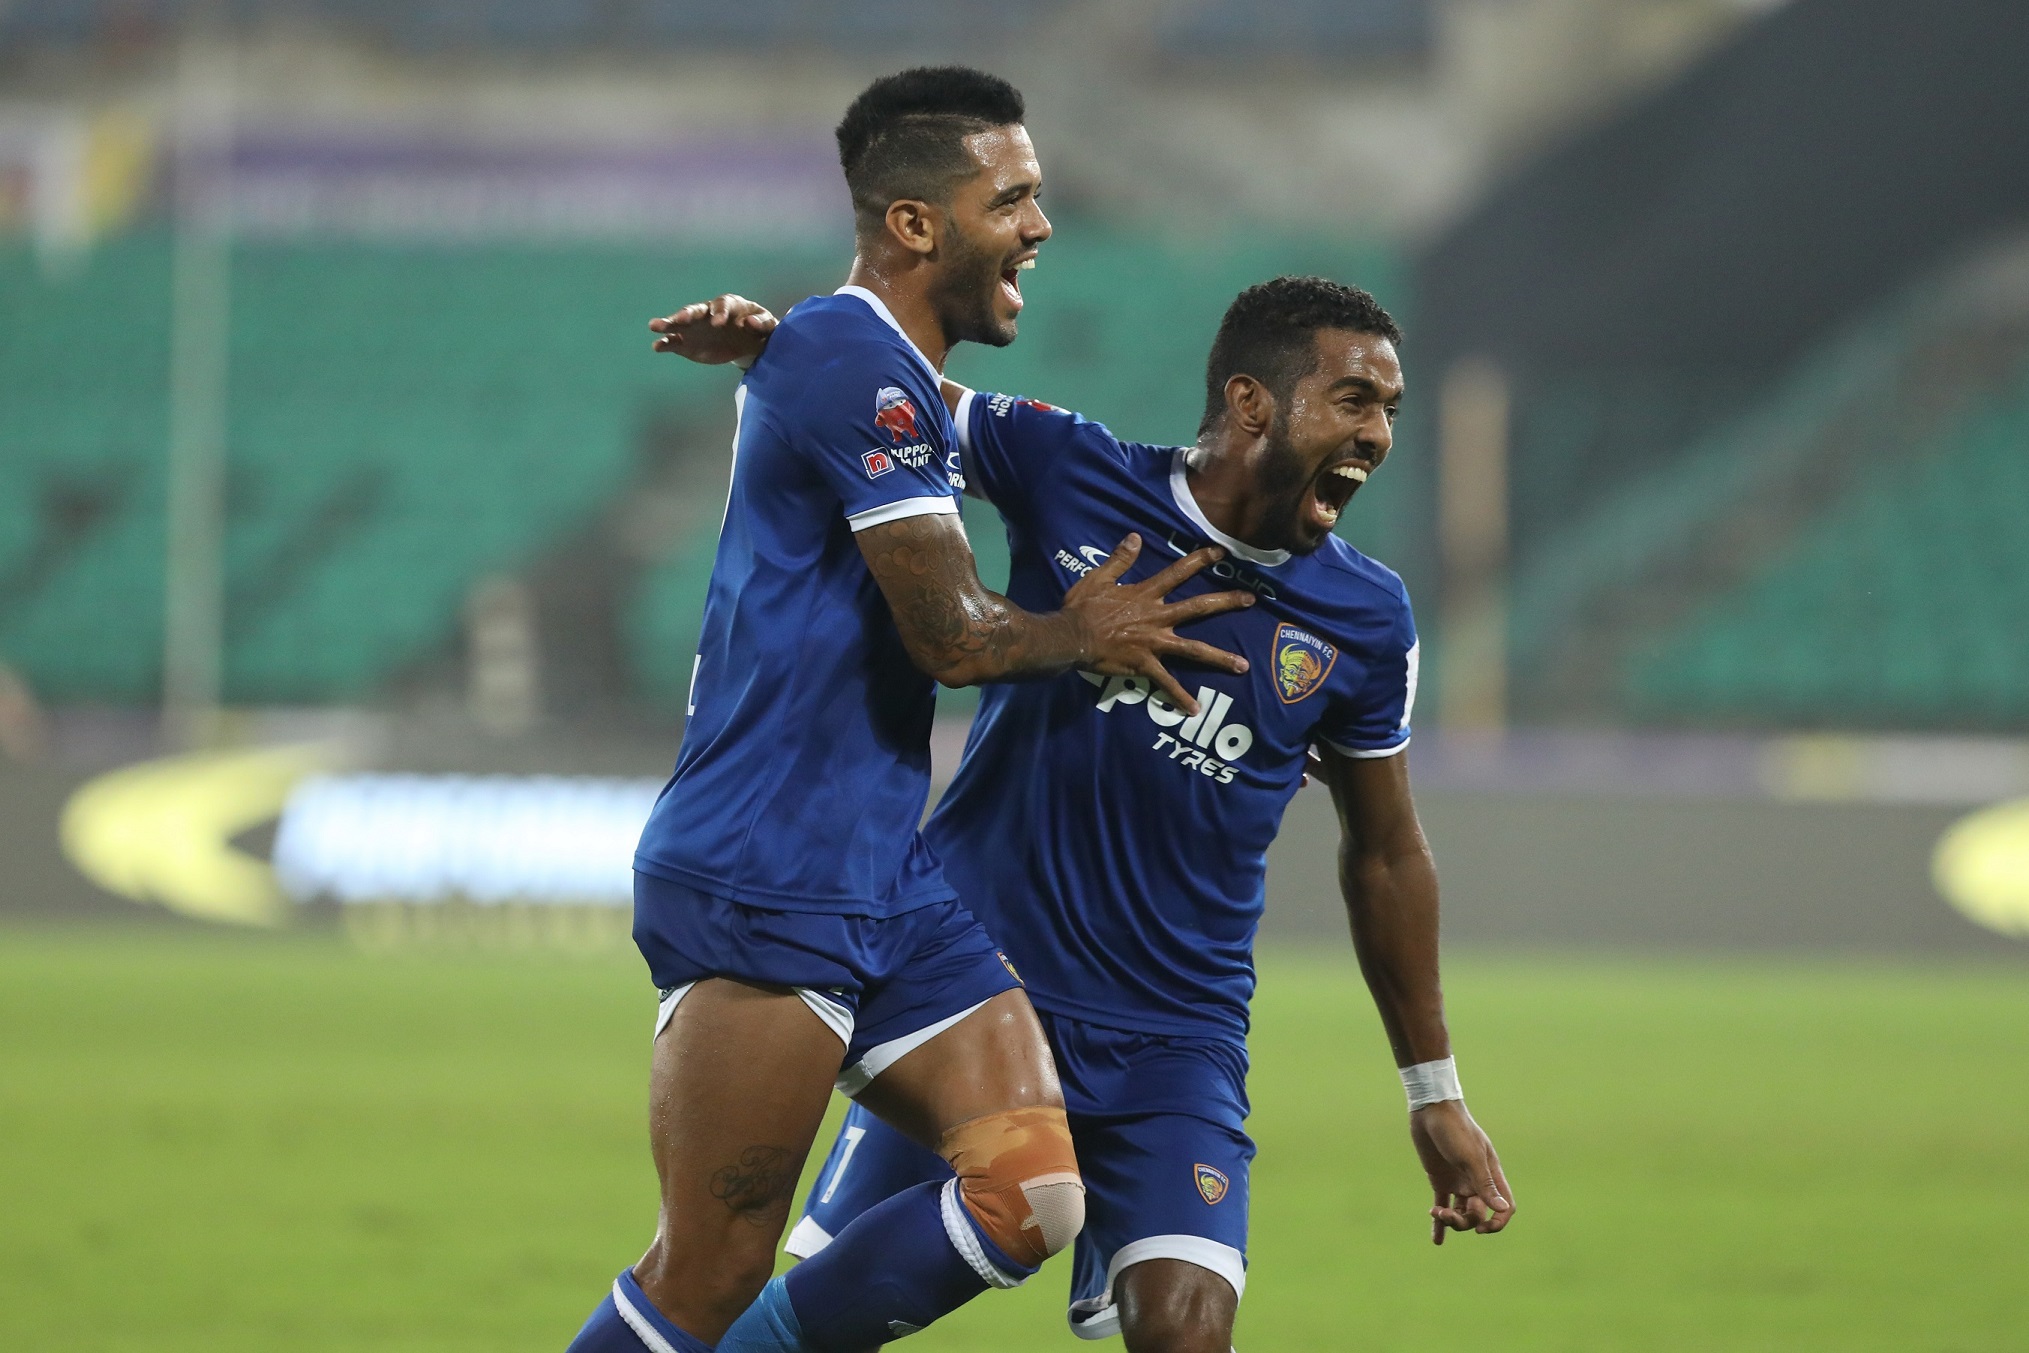 AFC Cup 2019 | Late Mohammad Rafi goal earns crucial point for Chennaiyin FC